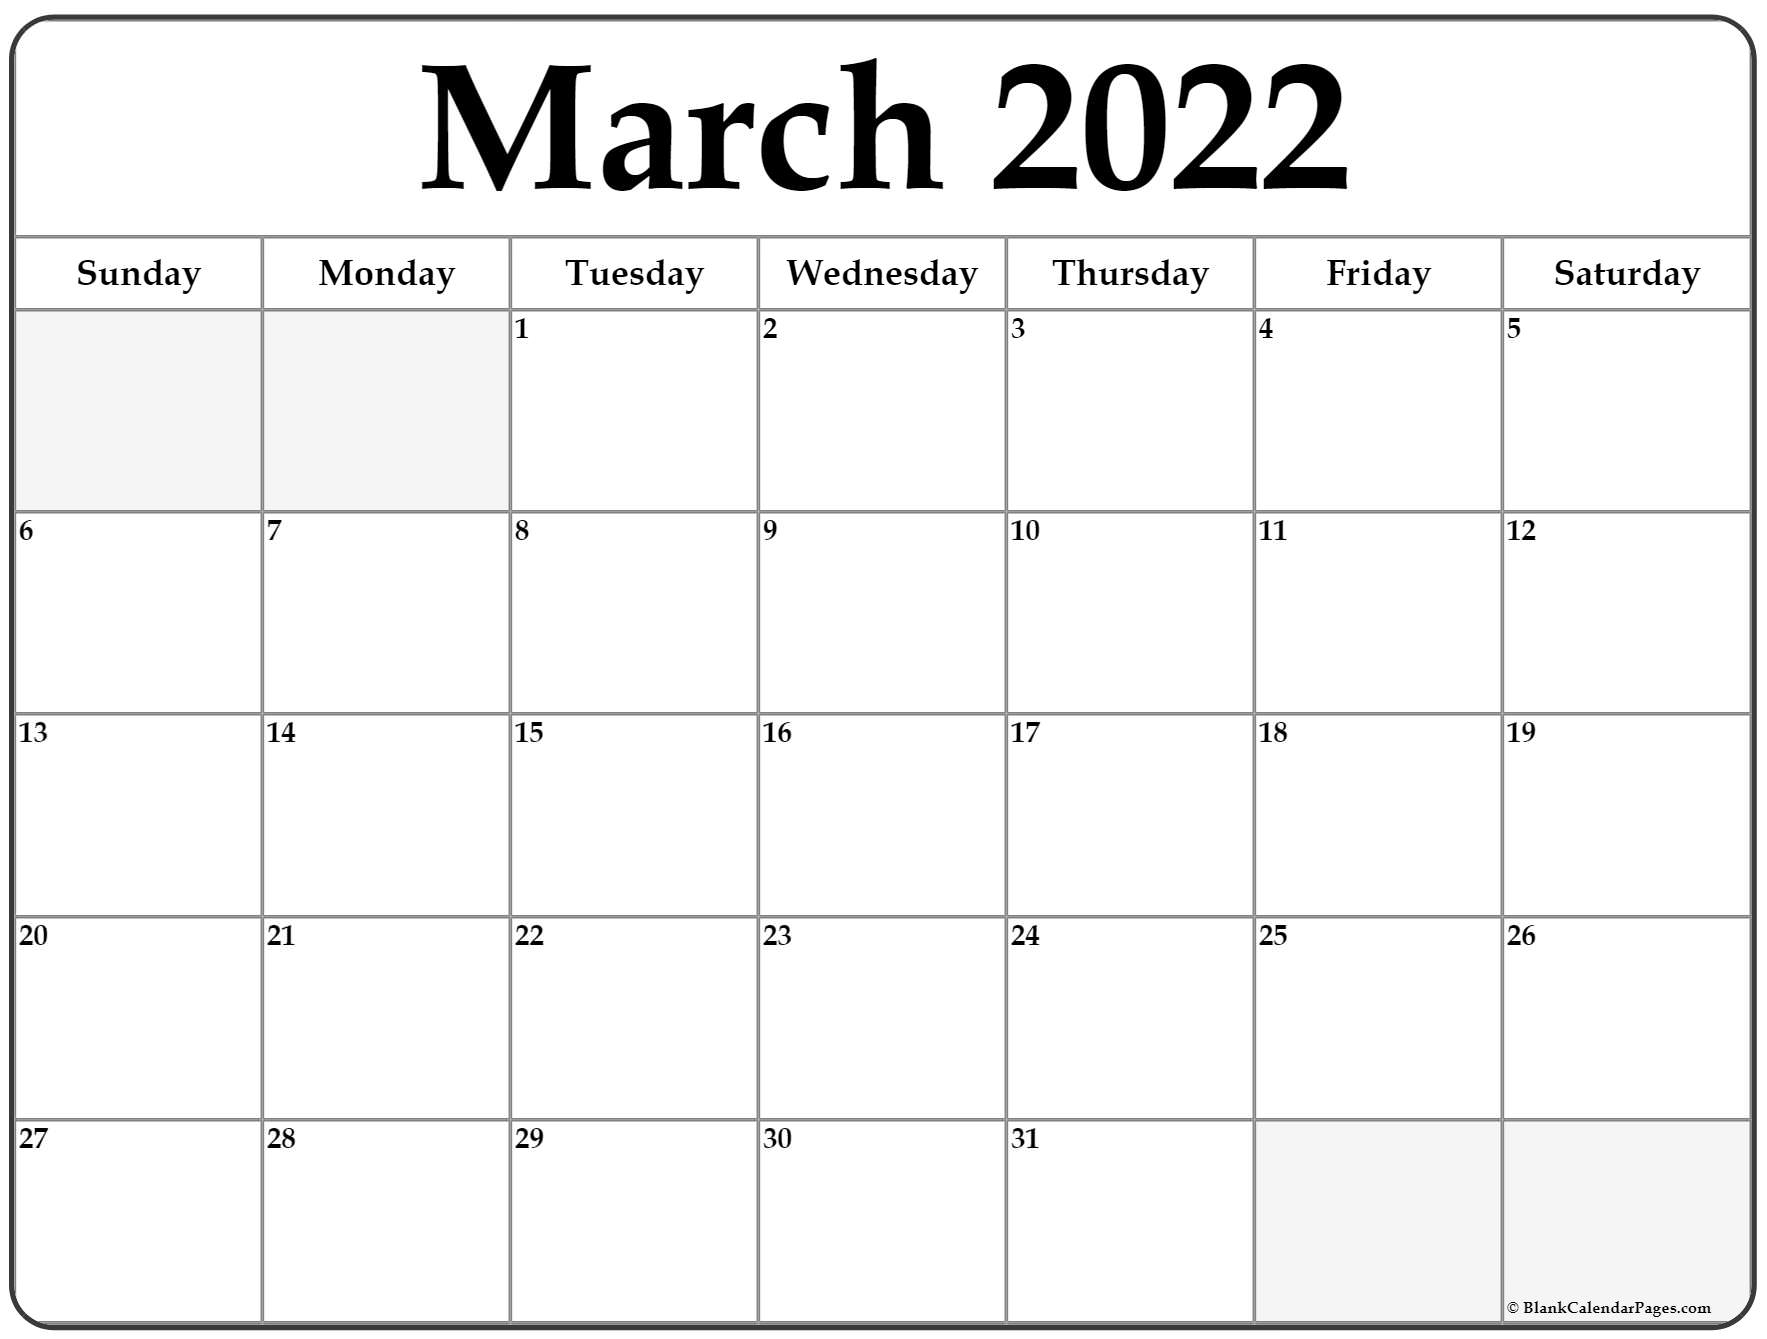 Collect March 2022 Tithi Calendar